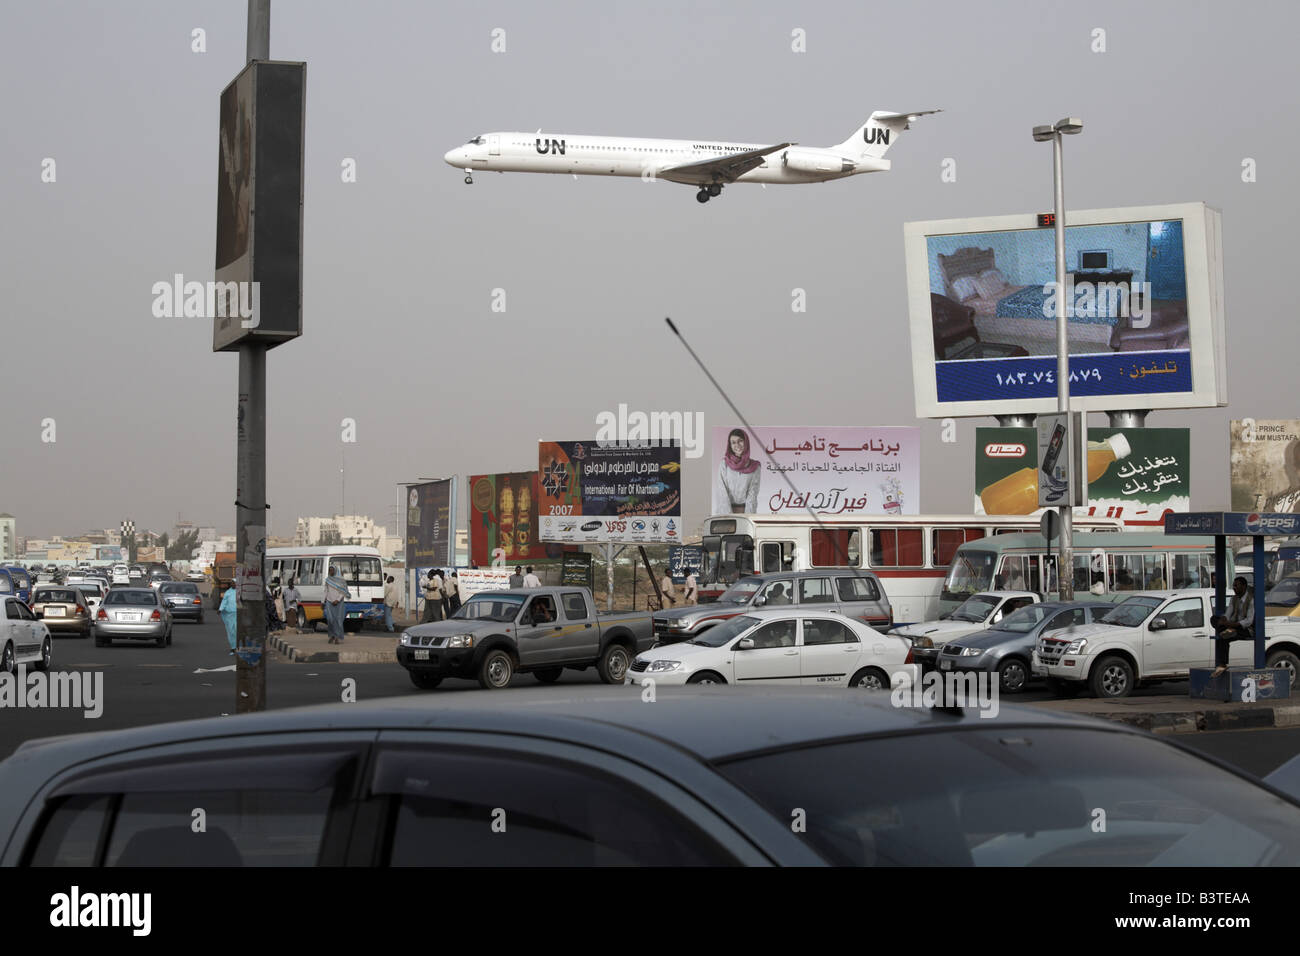 Vereinten Nationen Flug landet in Khartoum, Sudan Stockfoto